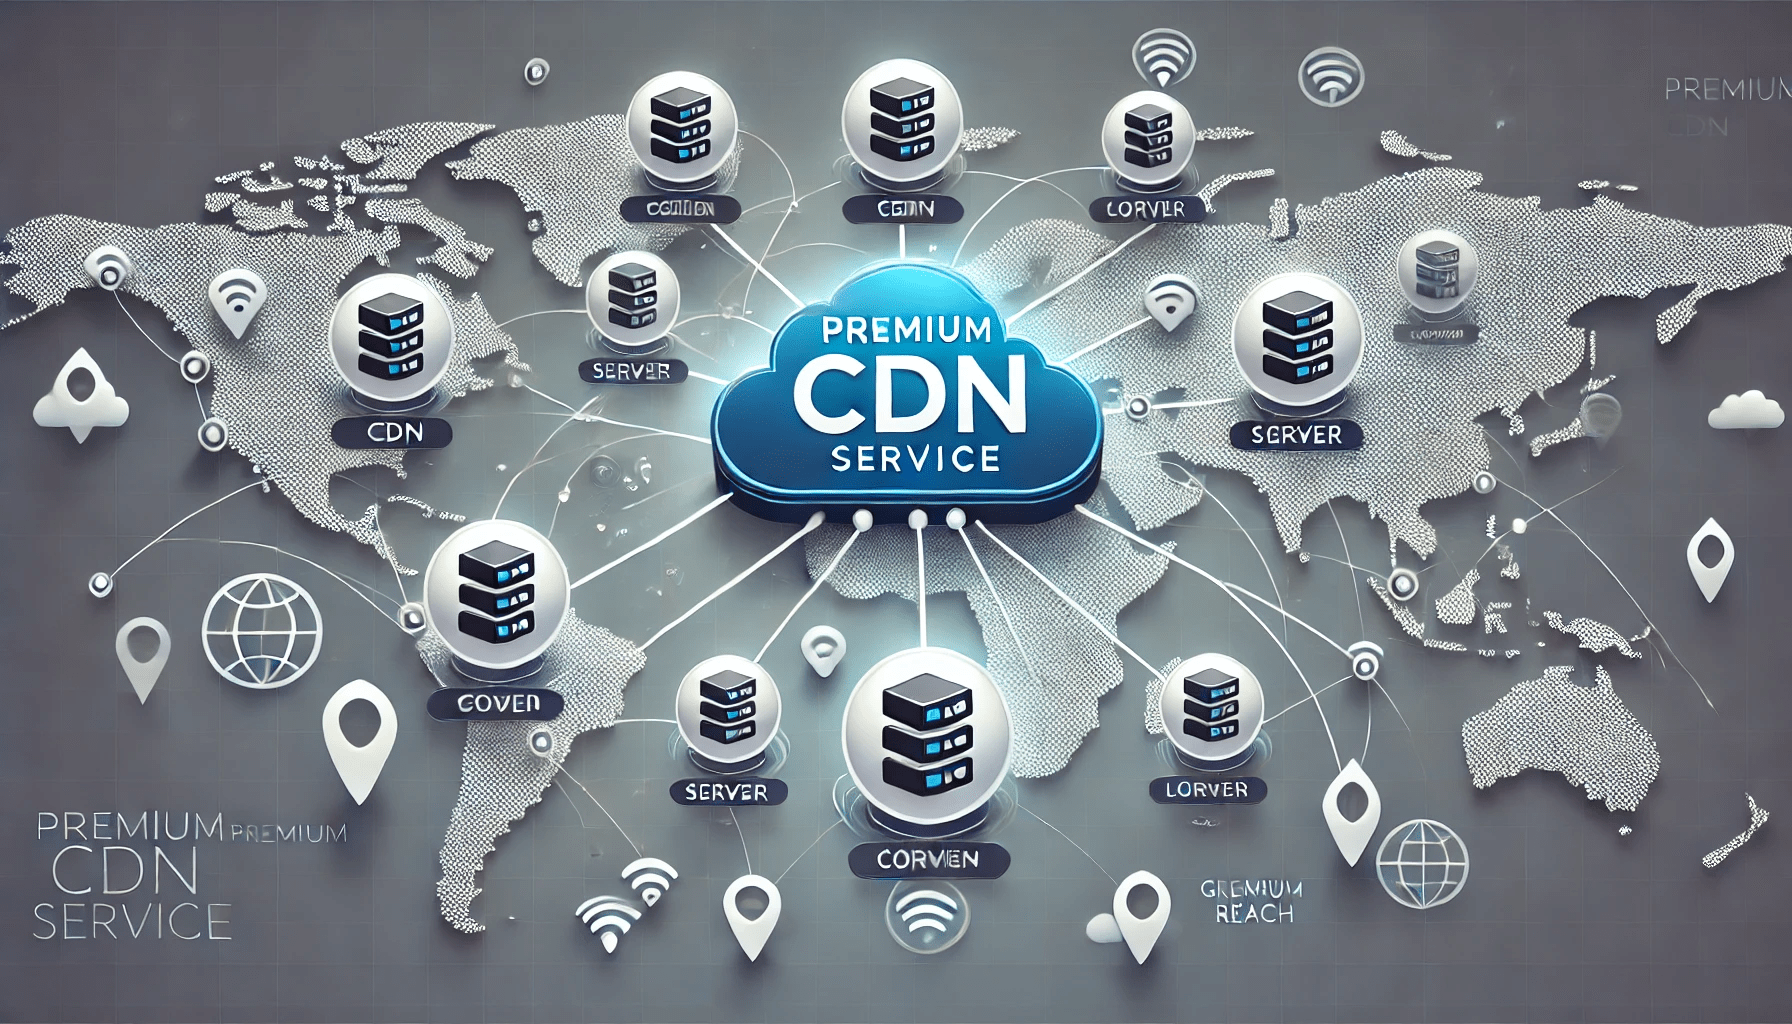 Premium CDN Service